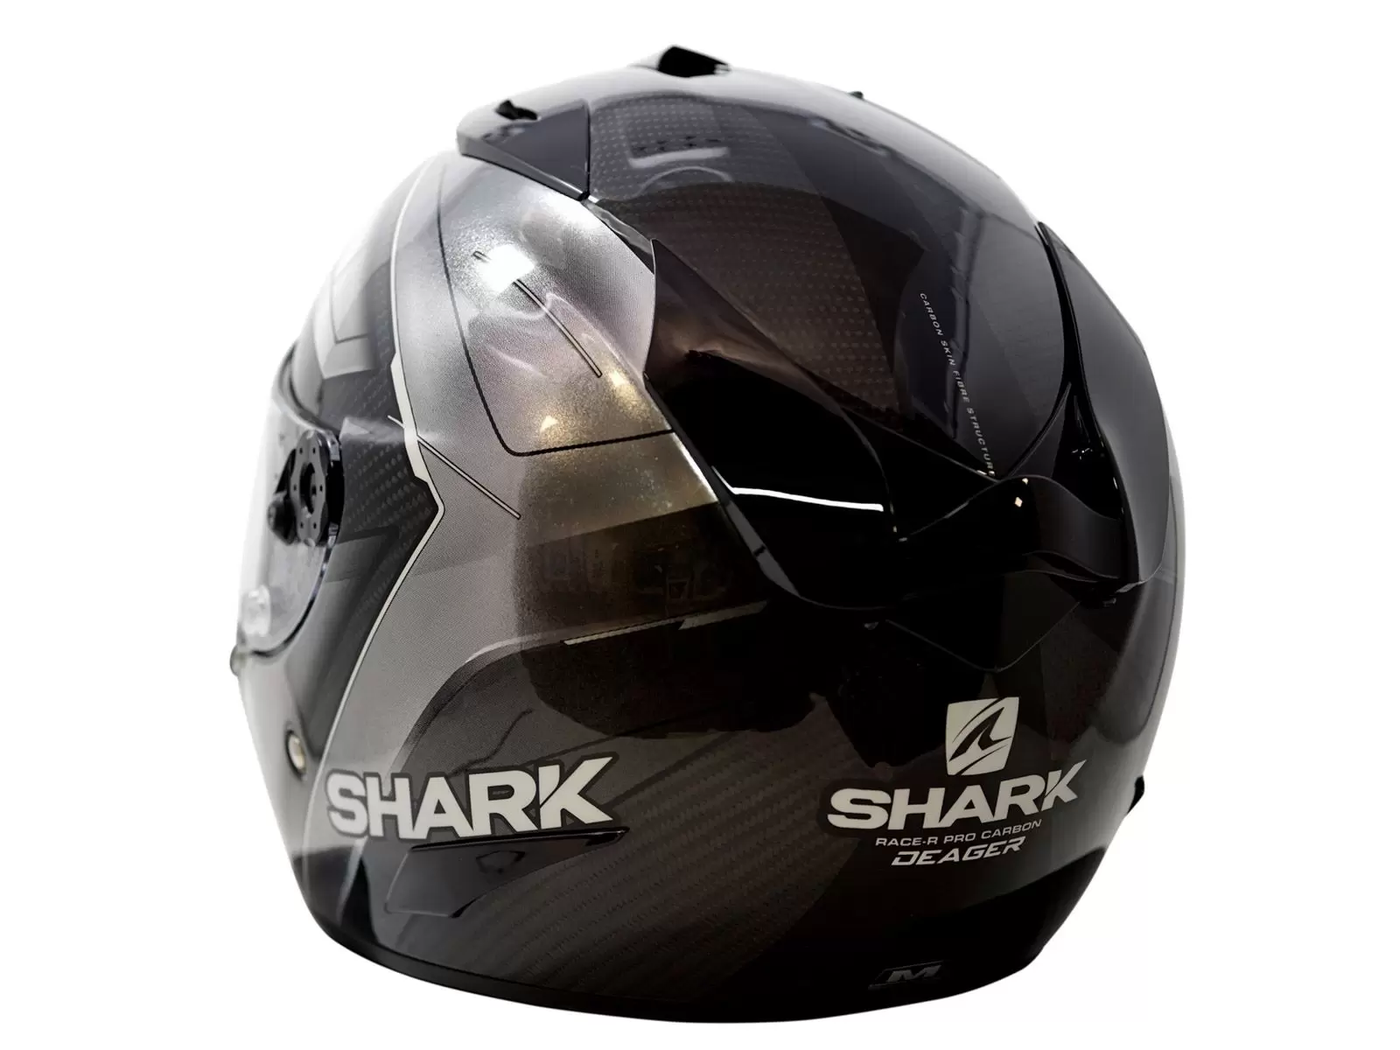 Shark Race-R Pro Carbon Deager Silver Dreiviertelansicht